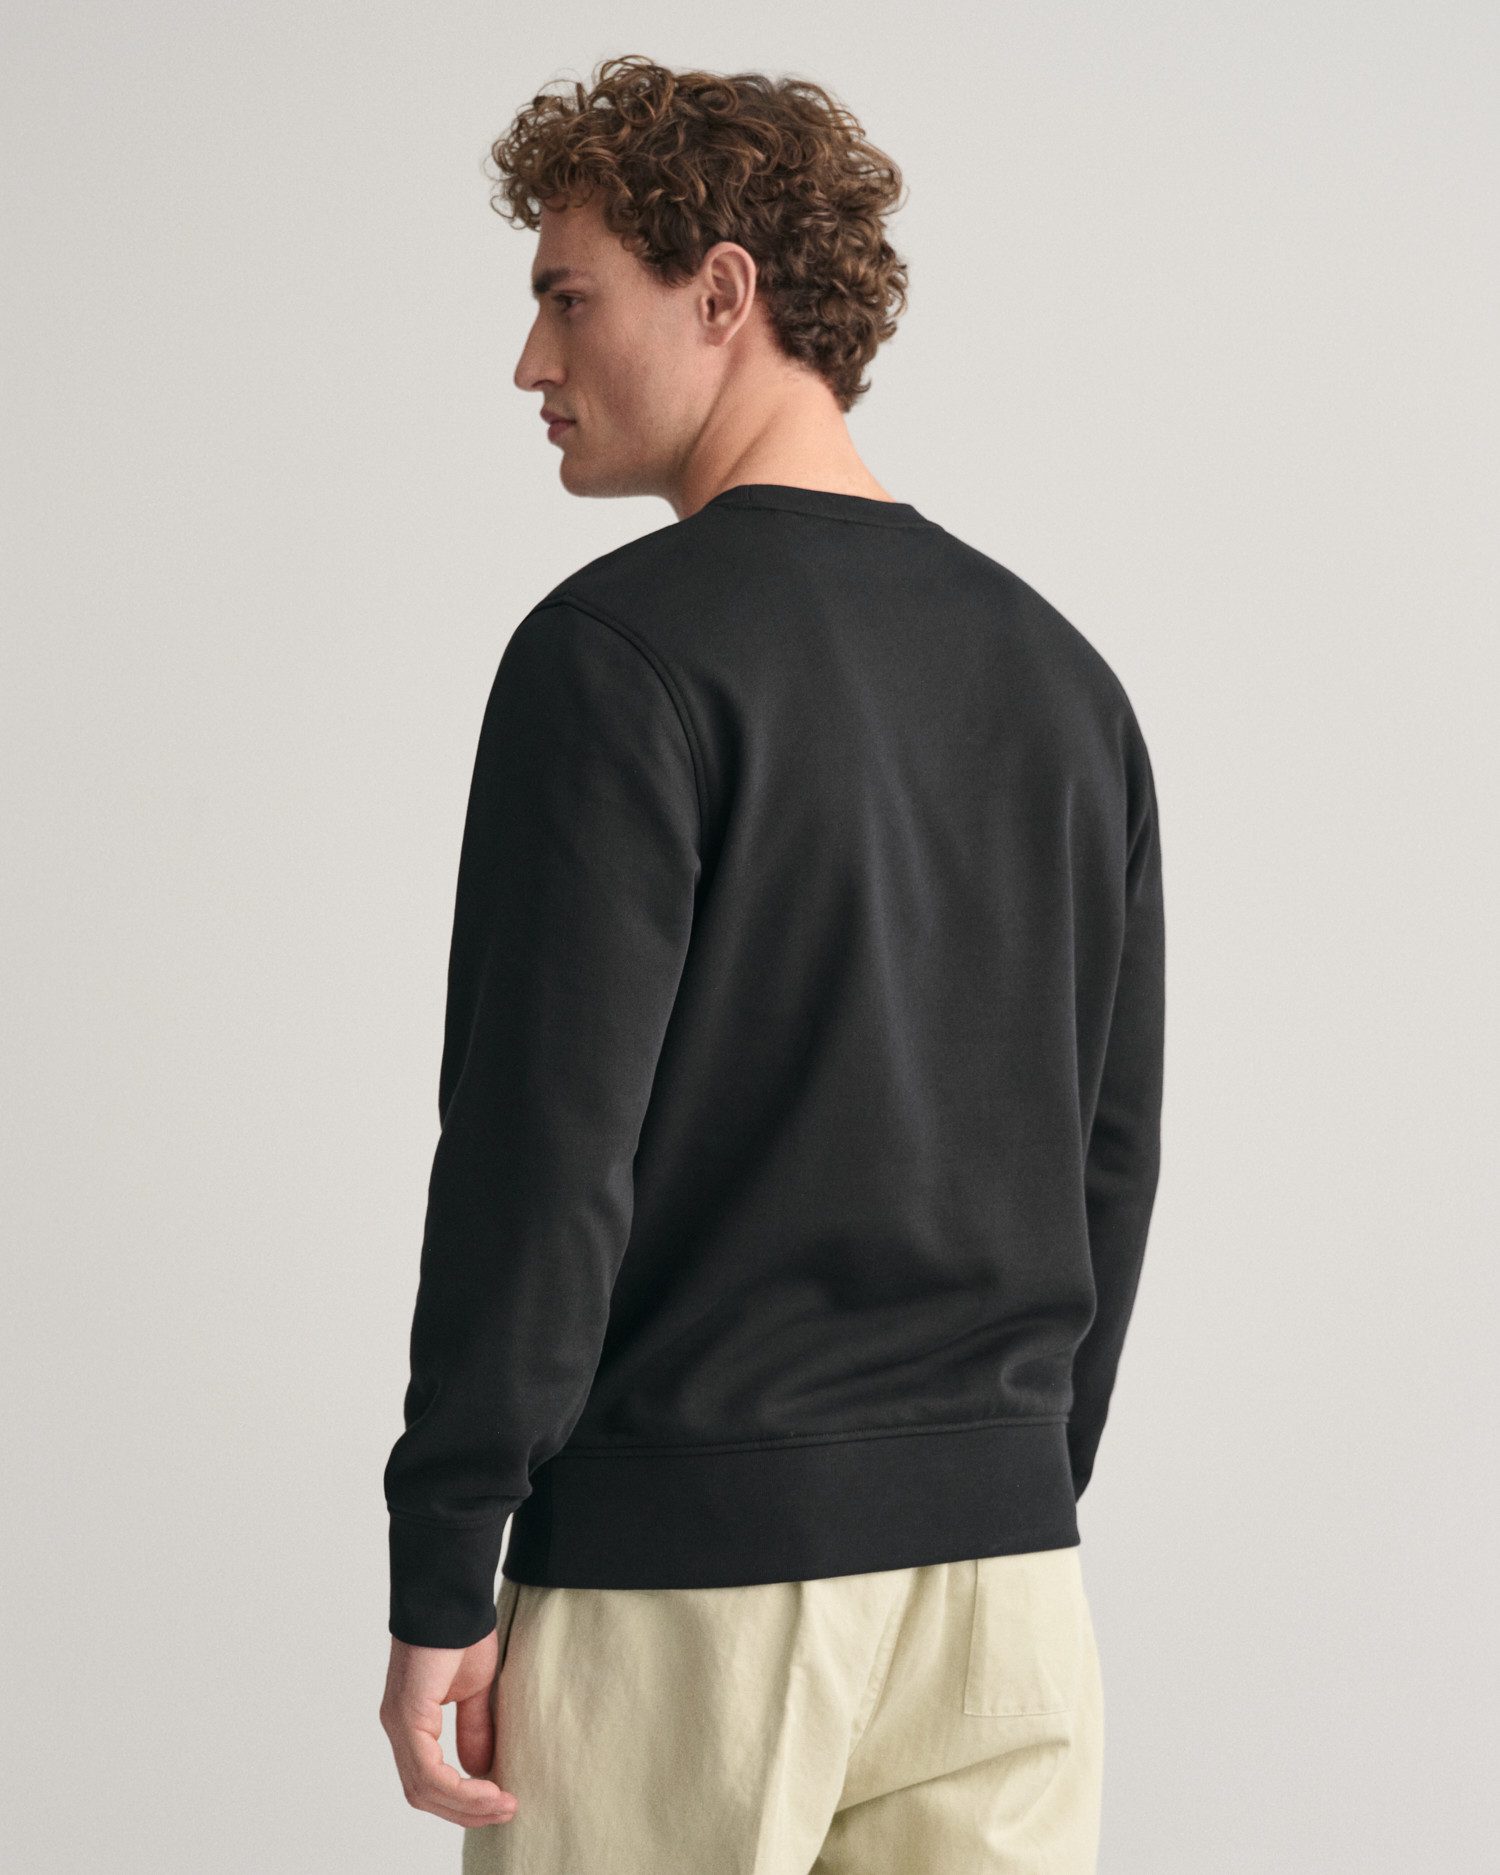 Gant Sweatshirt PRINTED GRAPHIC C-NECK SWEAT